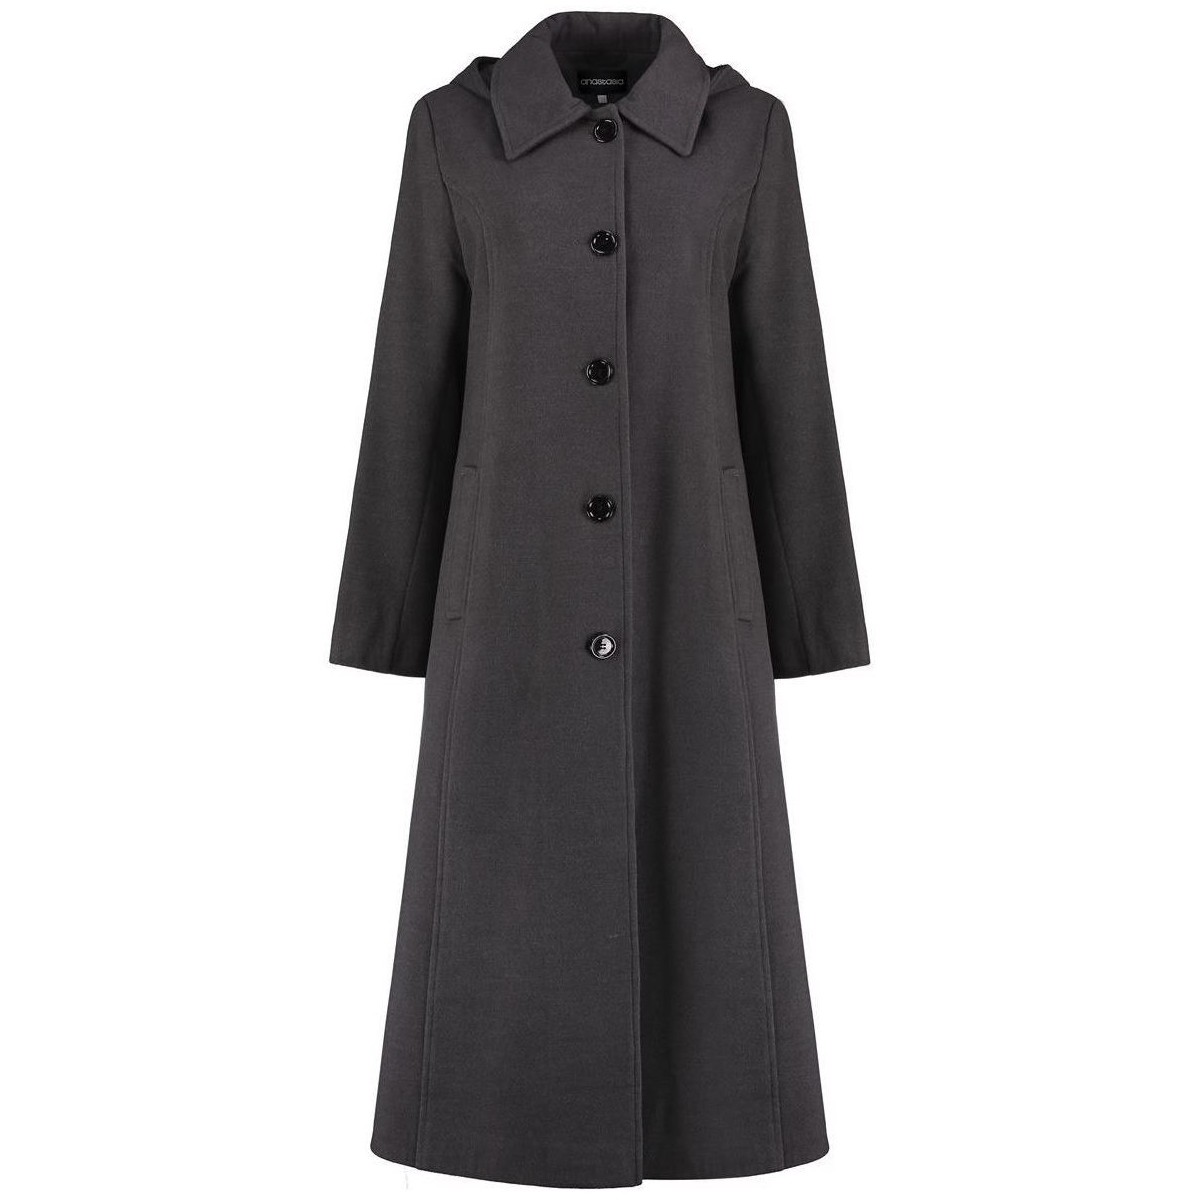 Clothing Women Coats De La Creme Long Detachable Hooded Winter Coat Grey